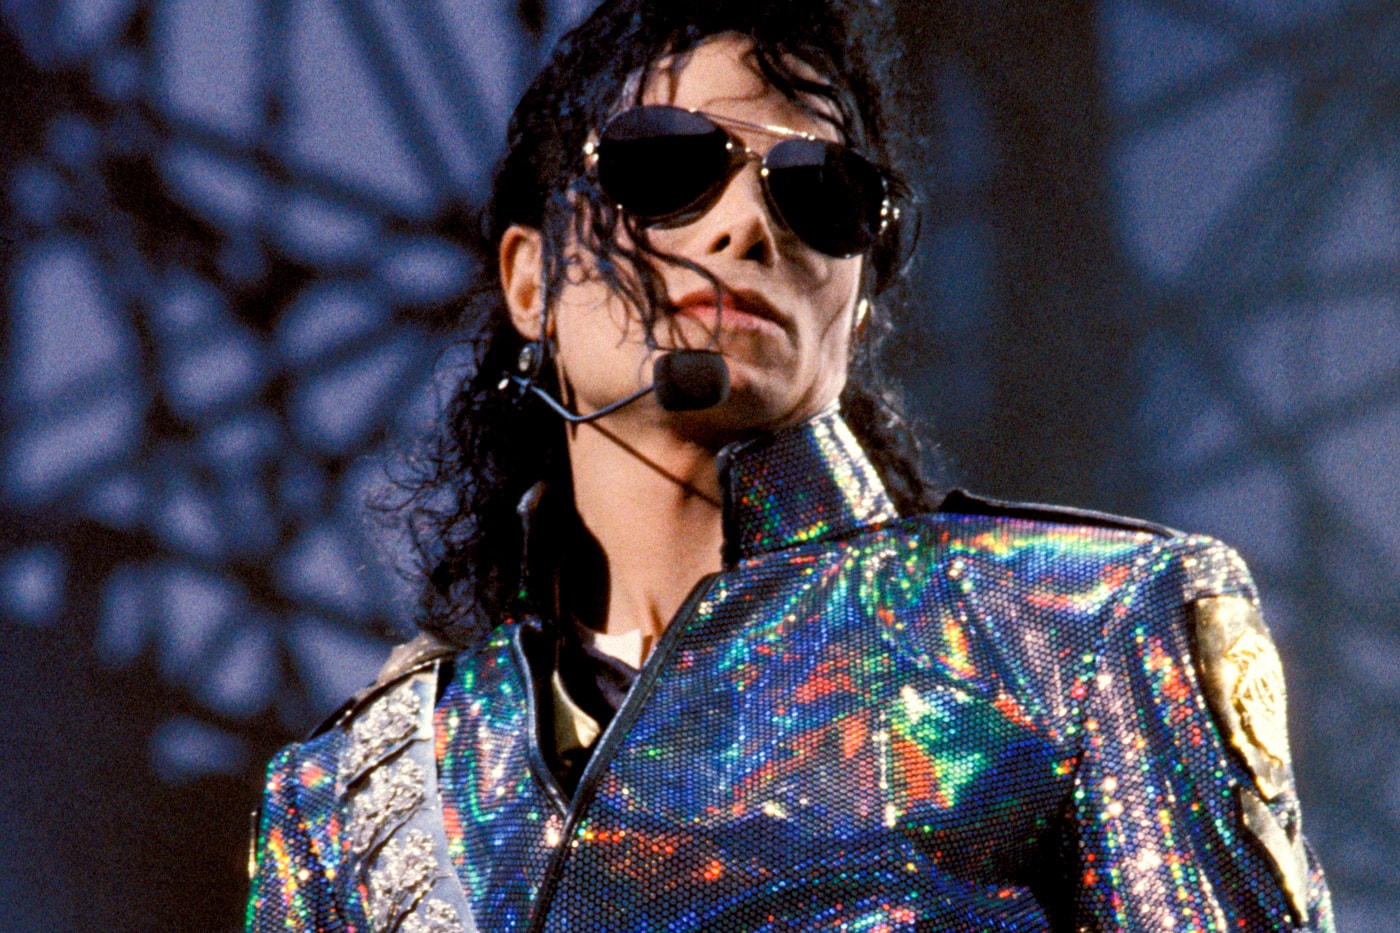 Michael Jackson featuring Akon - Hold My Hand